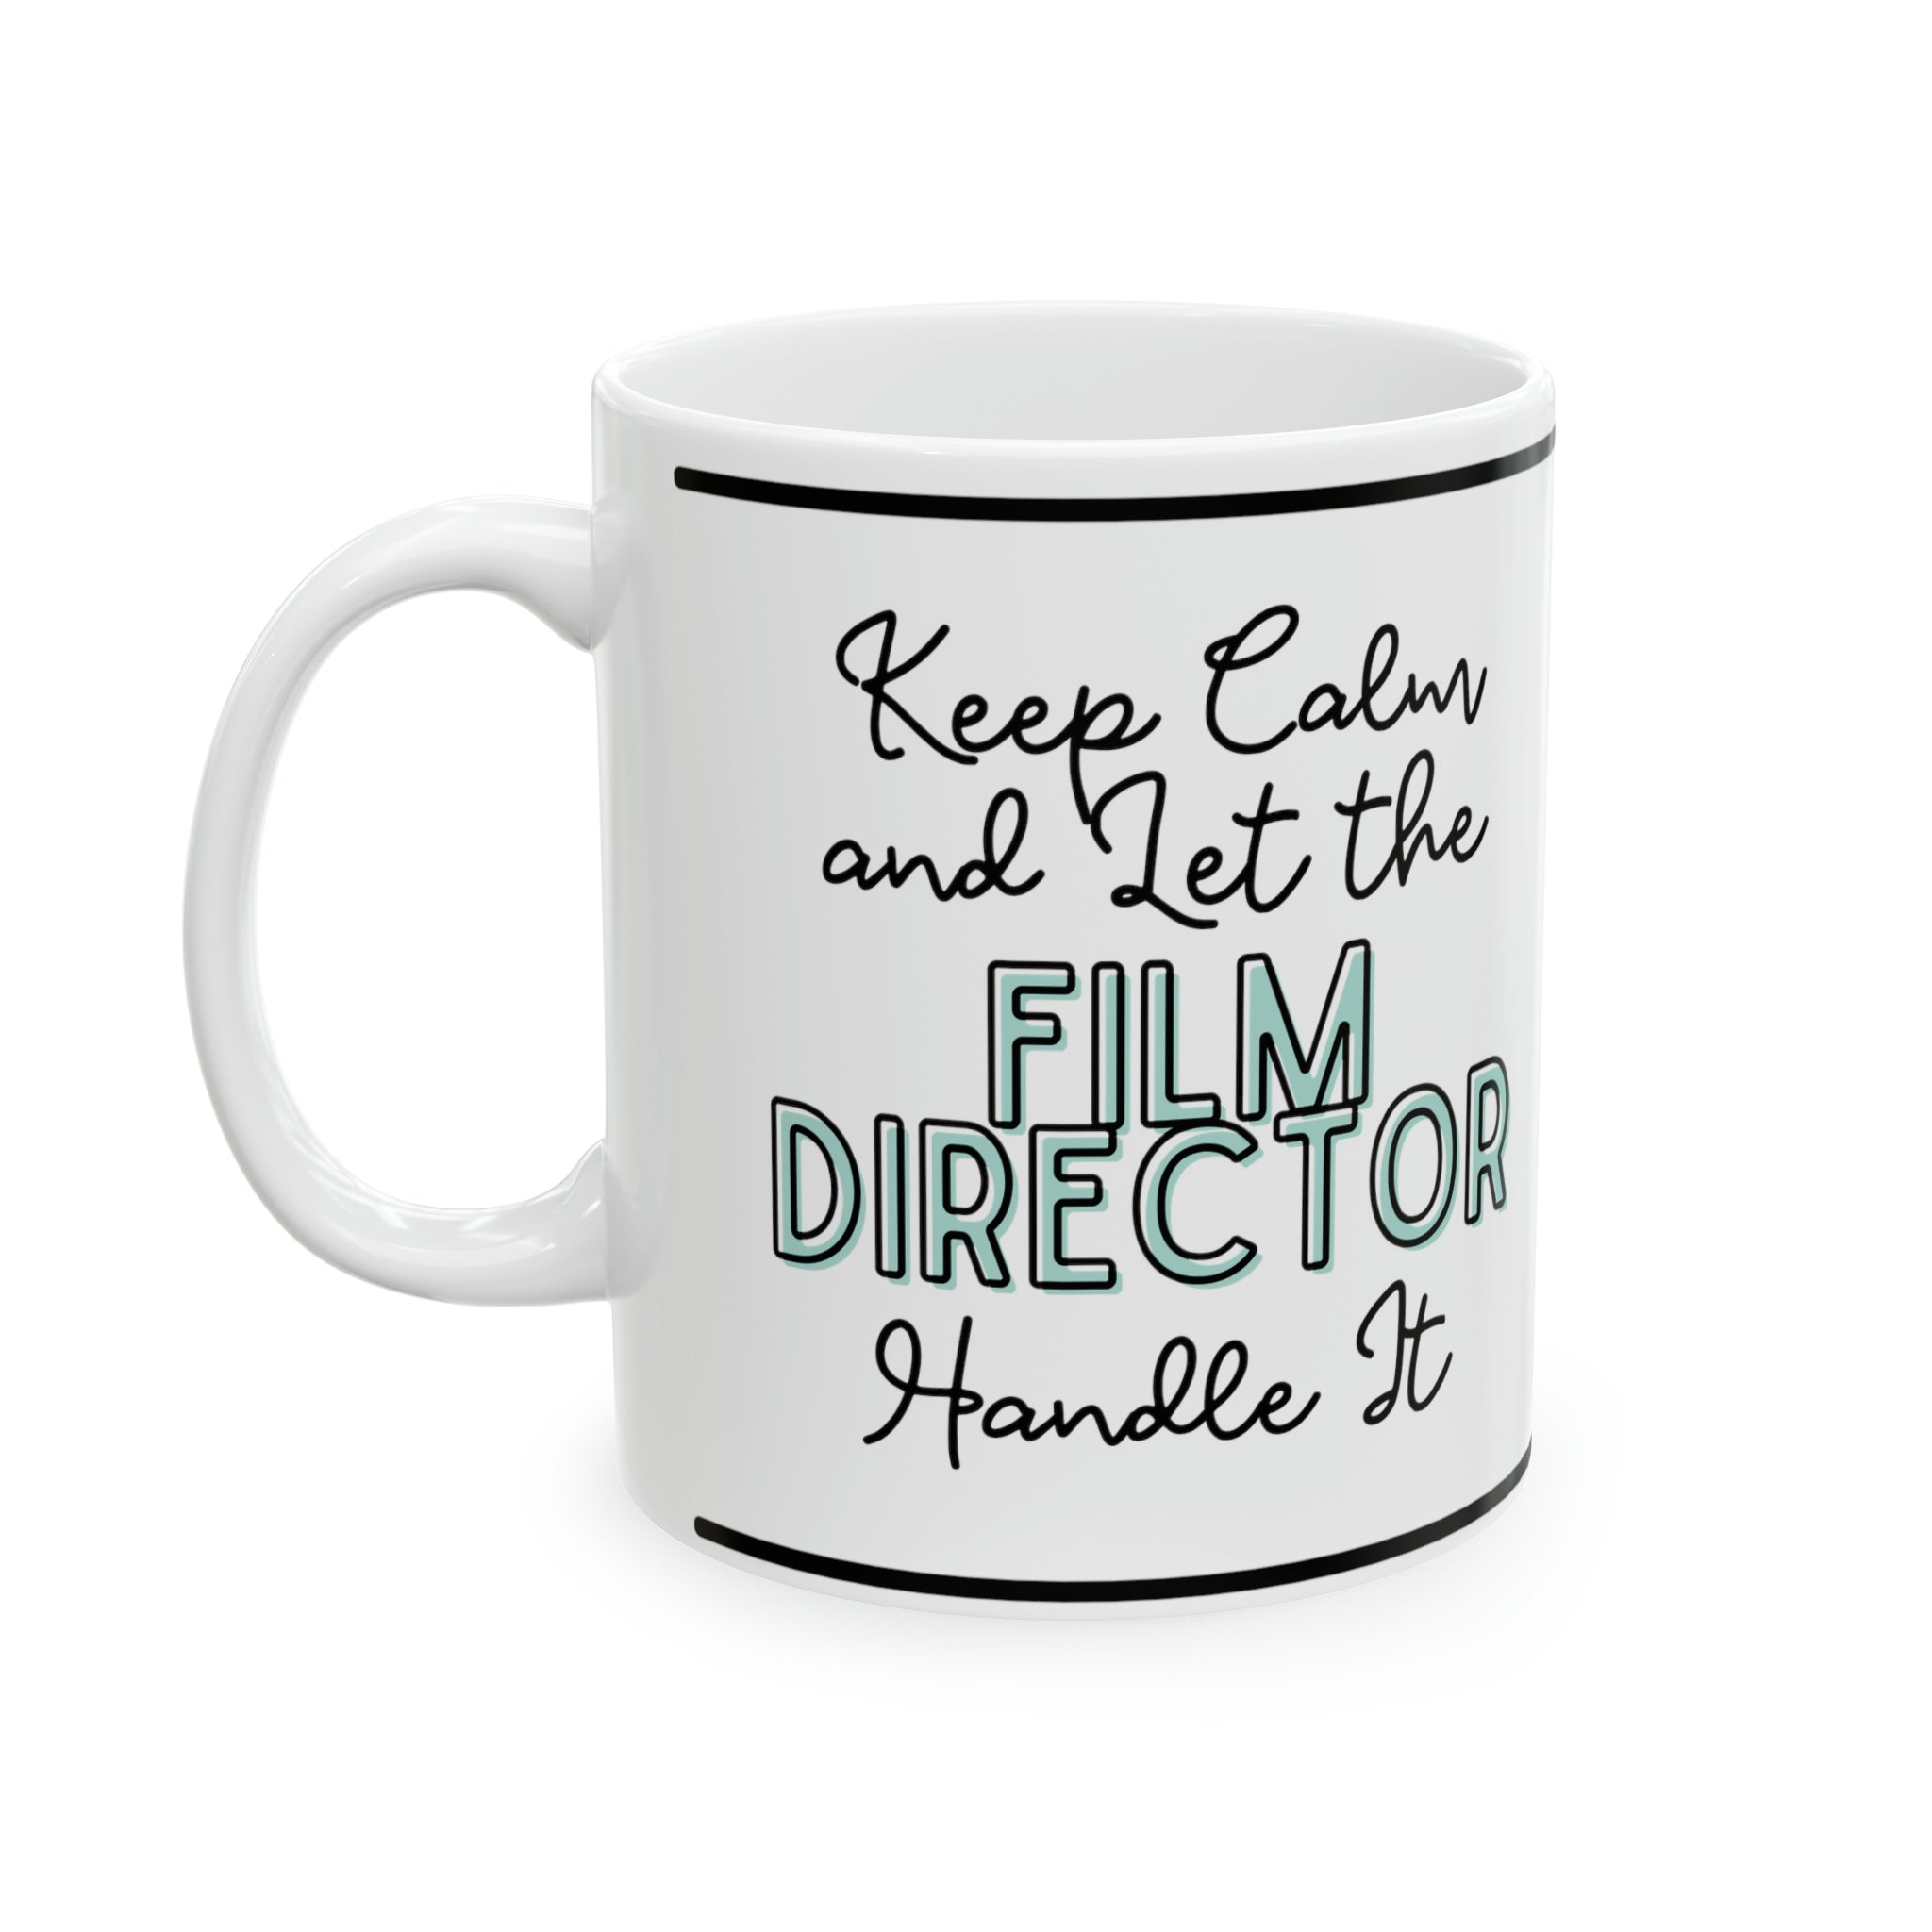 Keep Calm and let the Film Director Handle It - Ceramic Mug, 11oz